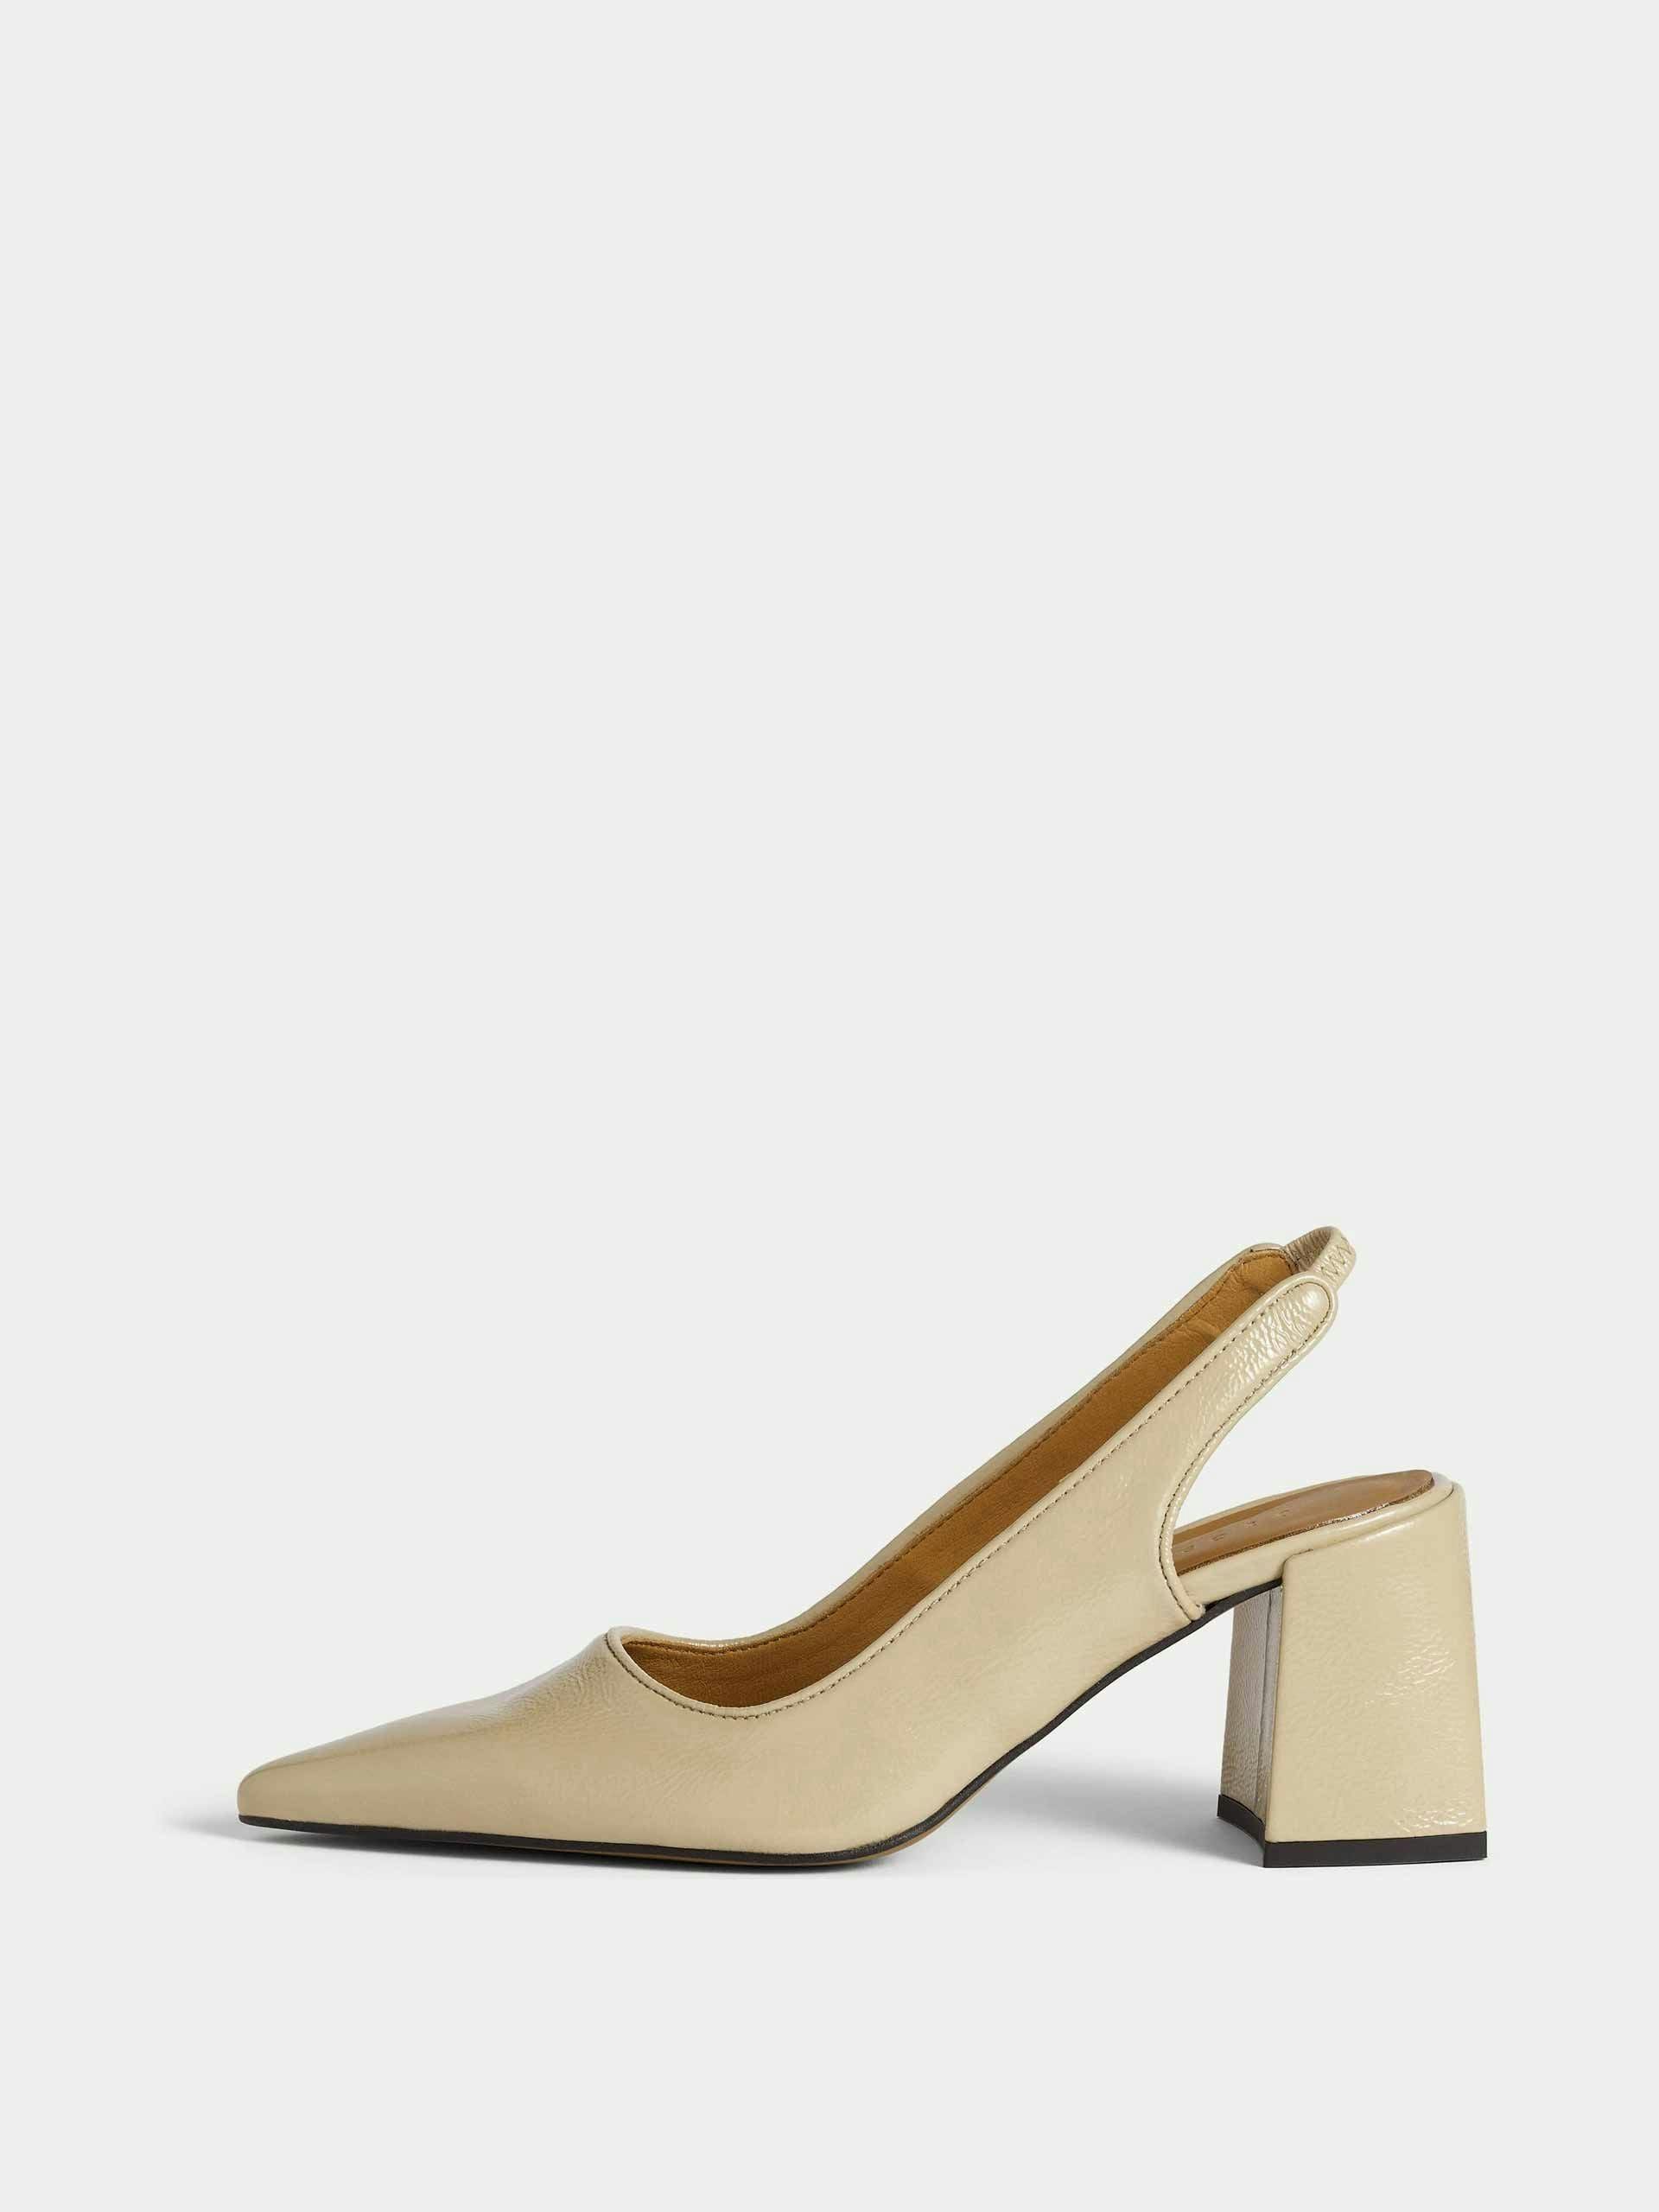 Leather heeled shoe